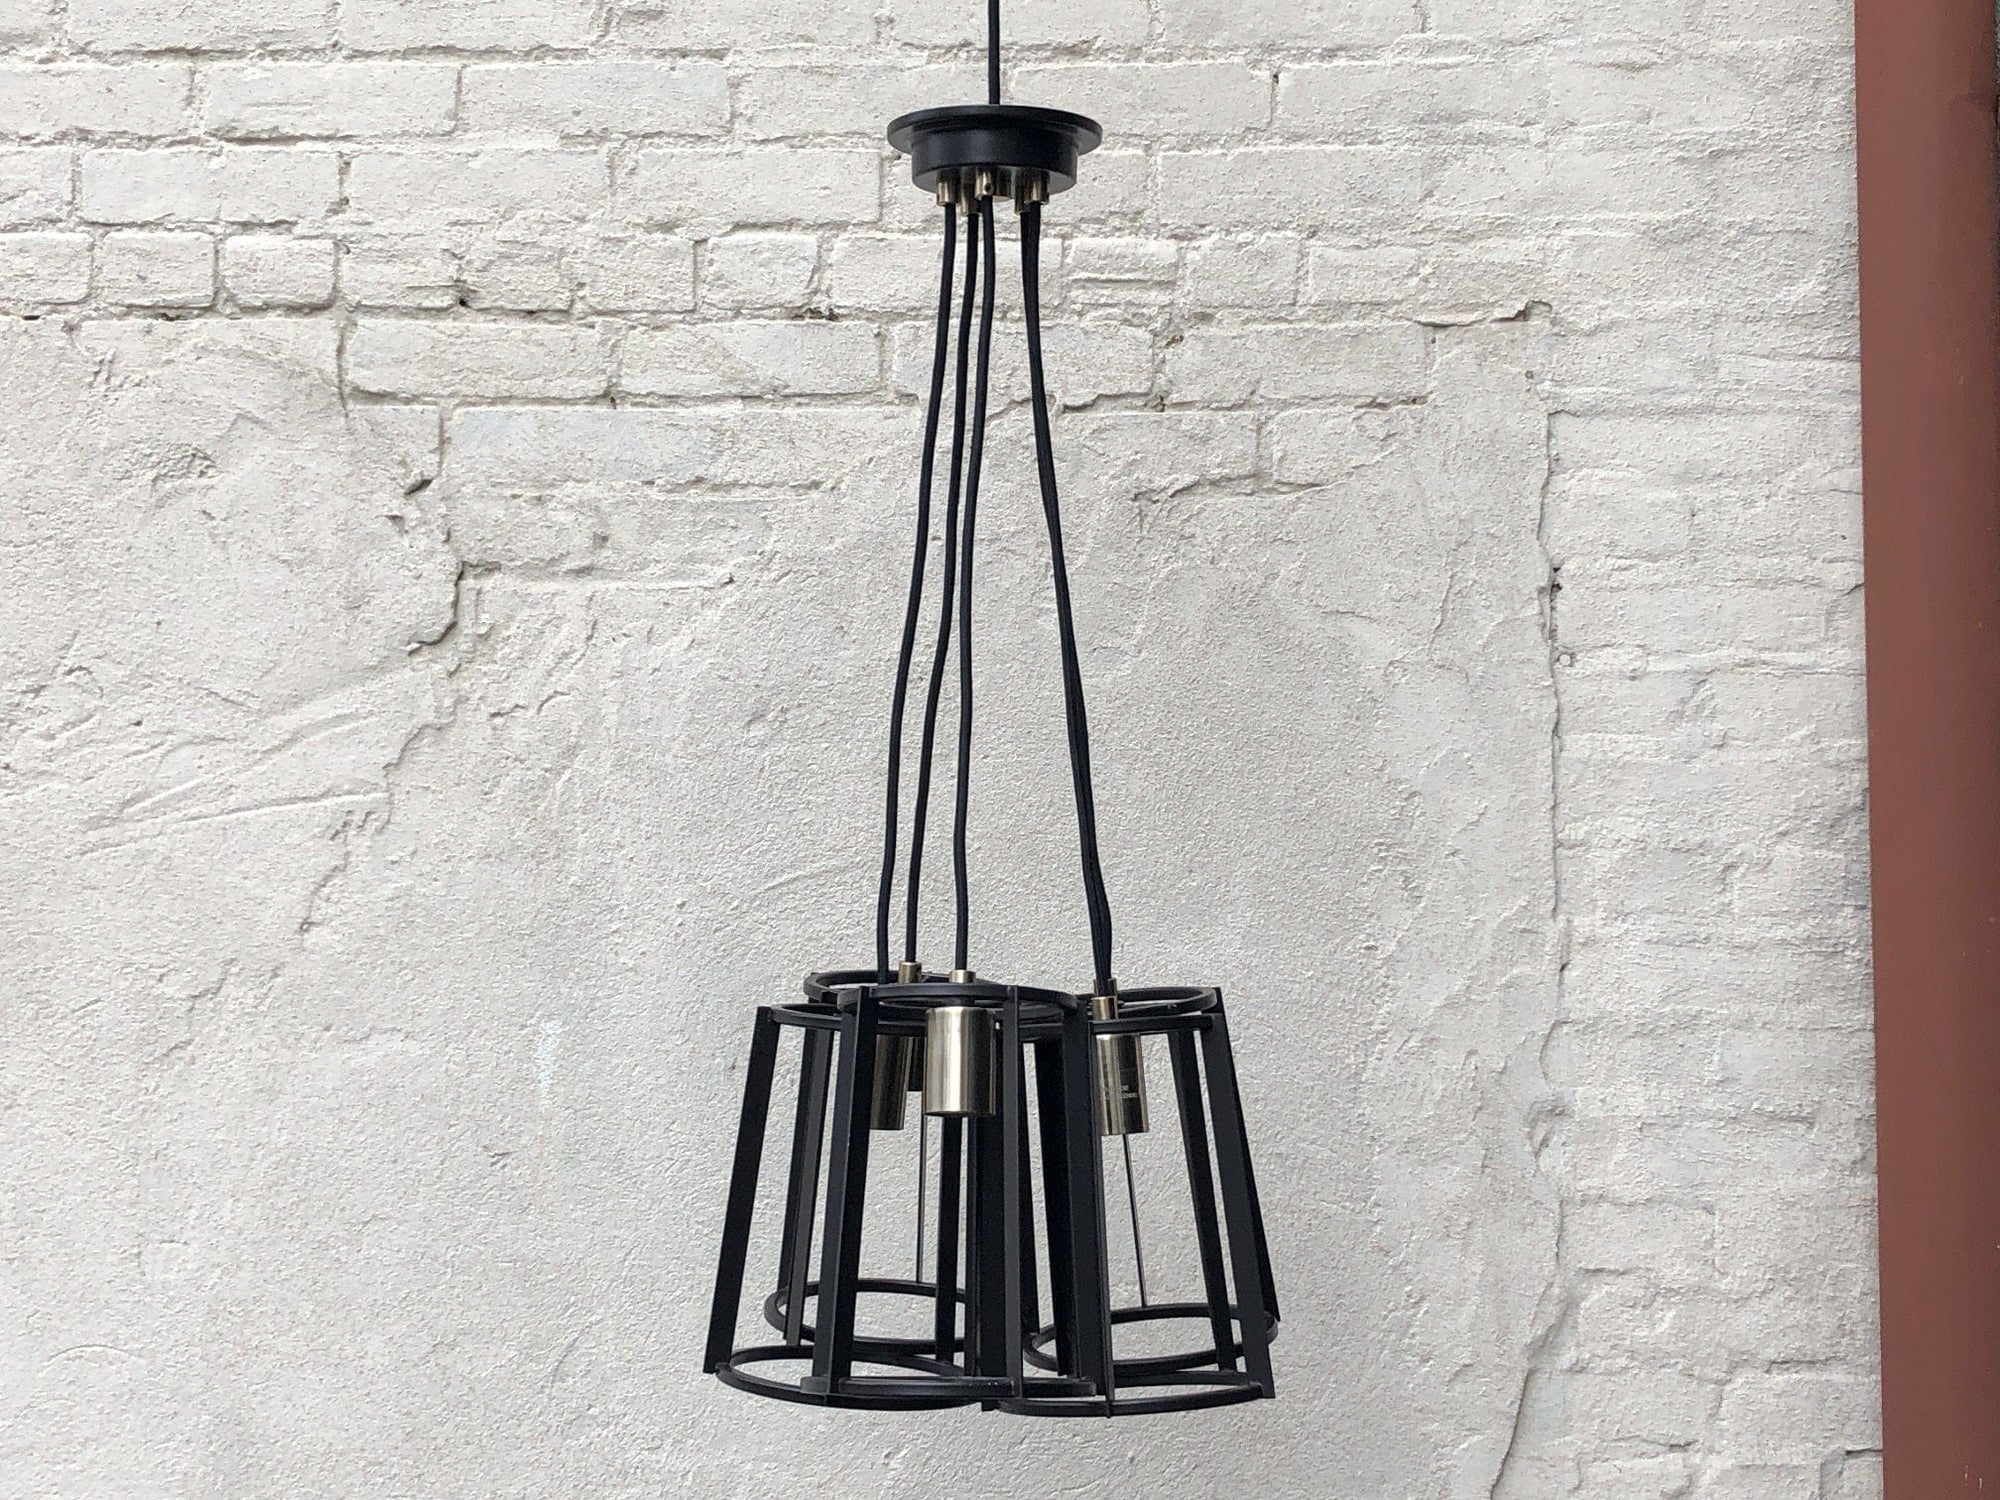 I Like Mike's Mid Century Modern lighting Quoizel Modern Industrial Black Iron 5-Light Chandelier-Contemporary Hanging Fixture Light